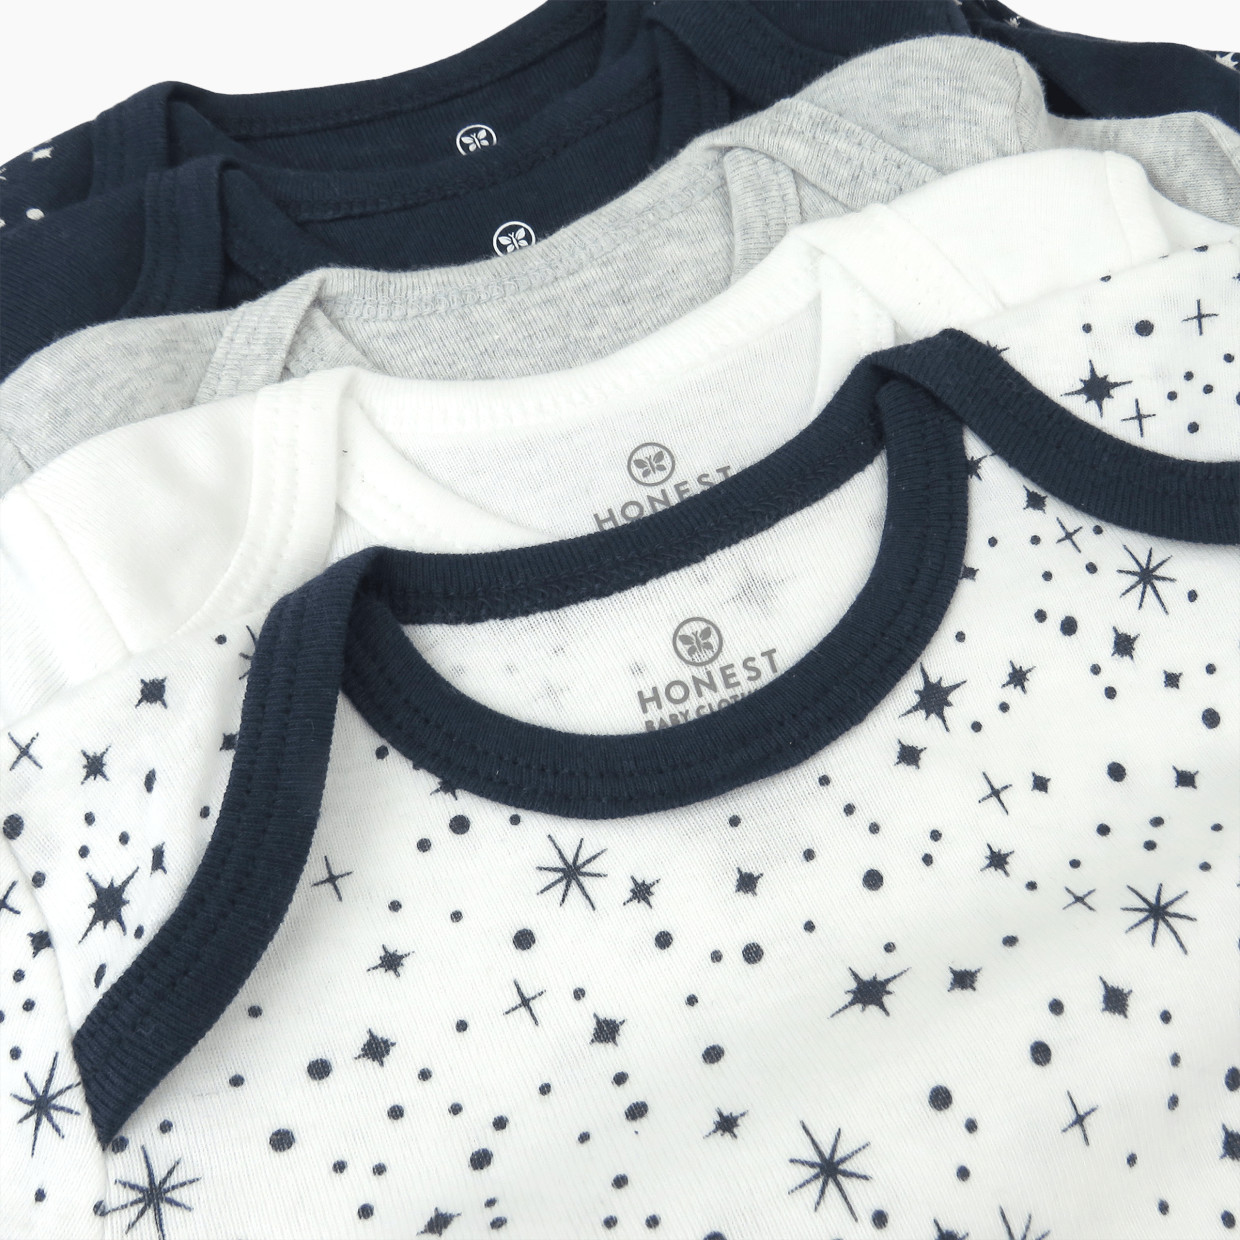 Honest Baby Clothing 5-Pack Organic Cotton Short Sleeve Bodysuit - Twinkle Star Navy, Nb, 5.